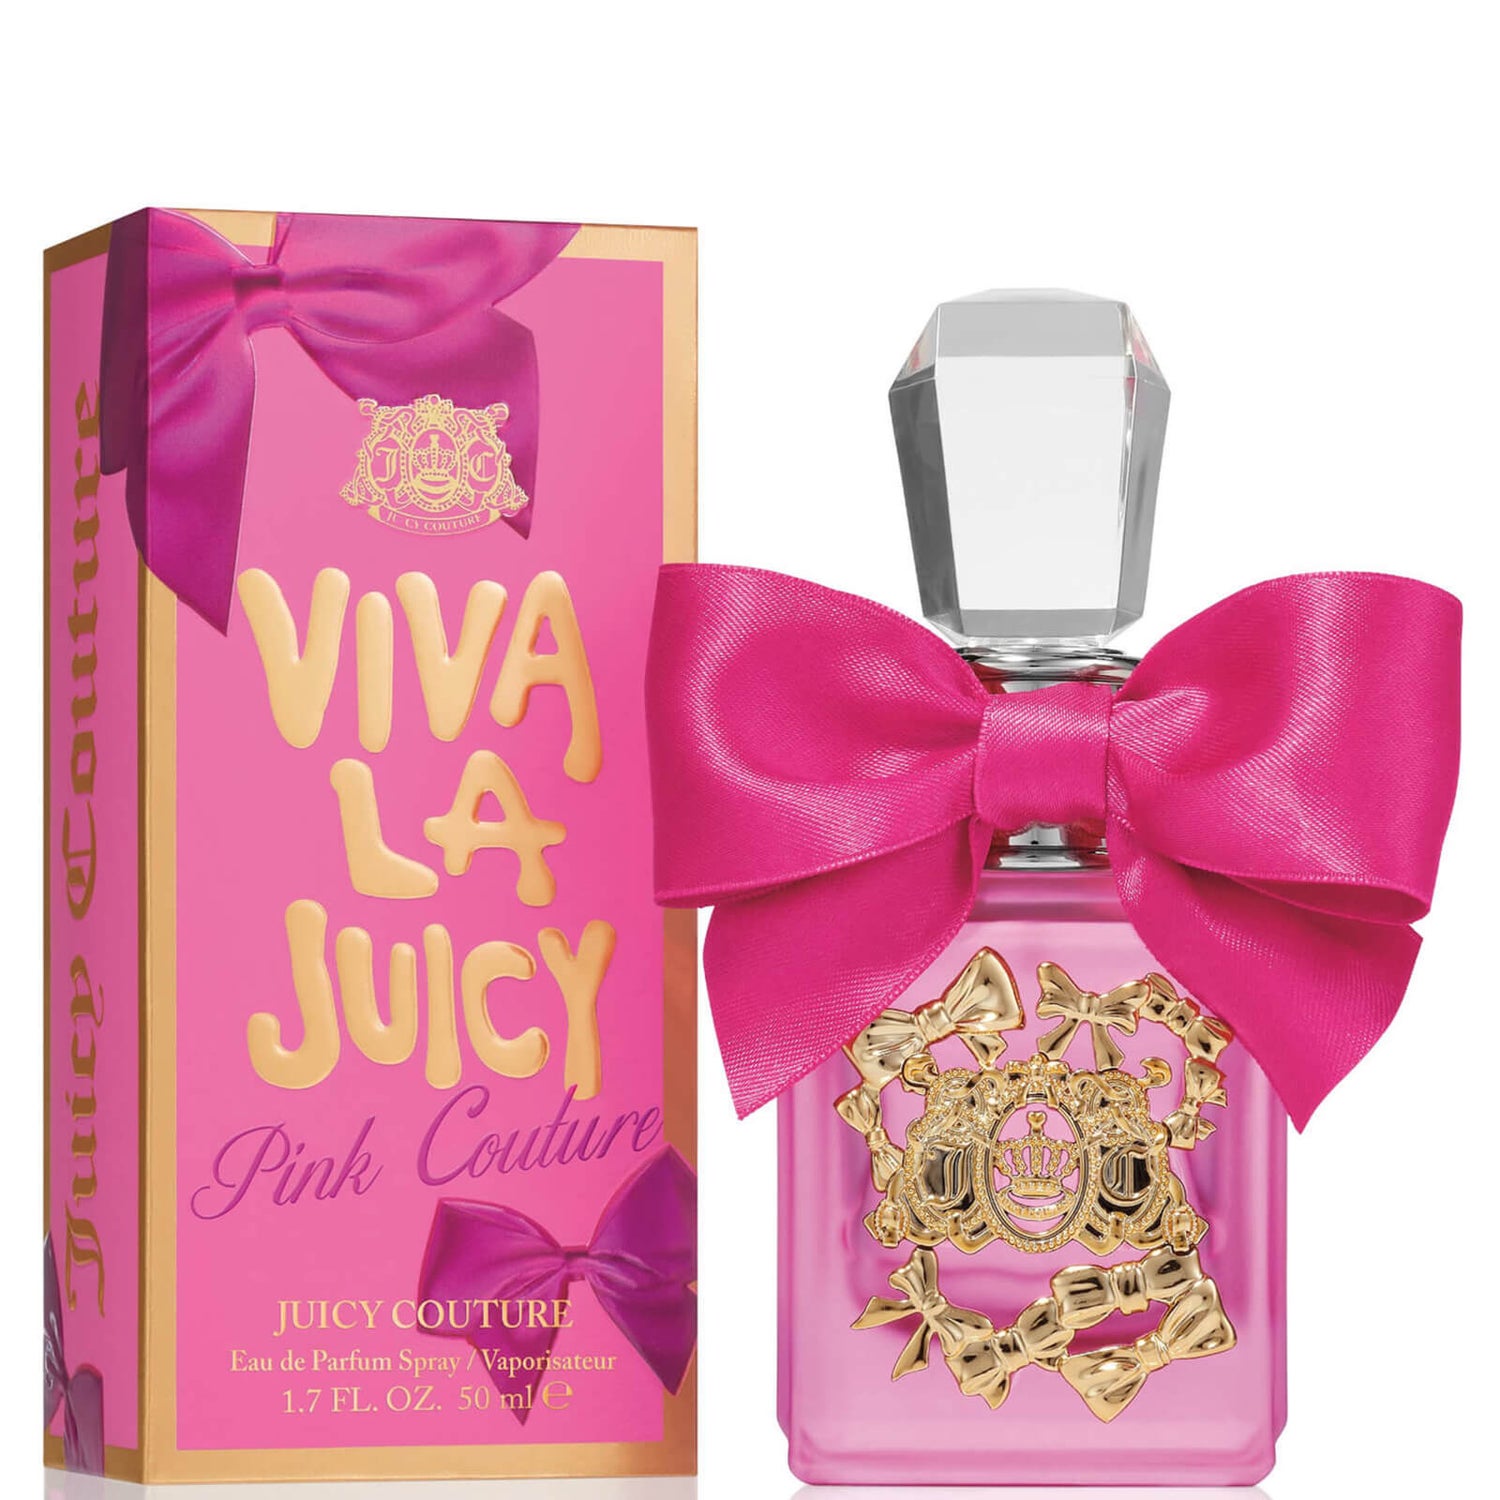 Juicy Couture Viva La Juicy Pink Couture Eau de Parfum Spray - 50ml